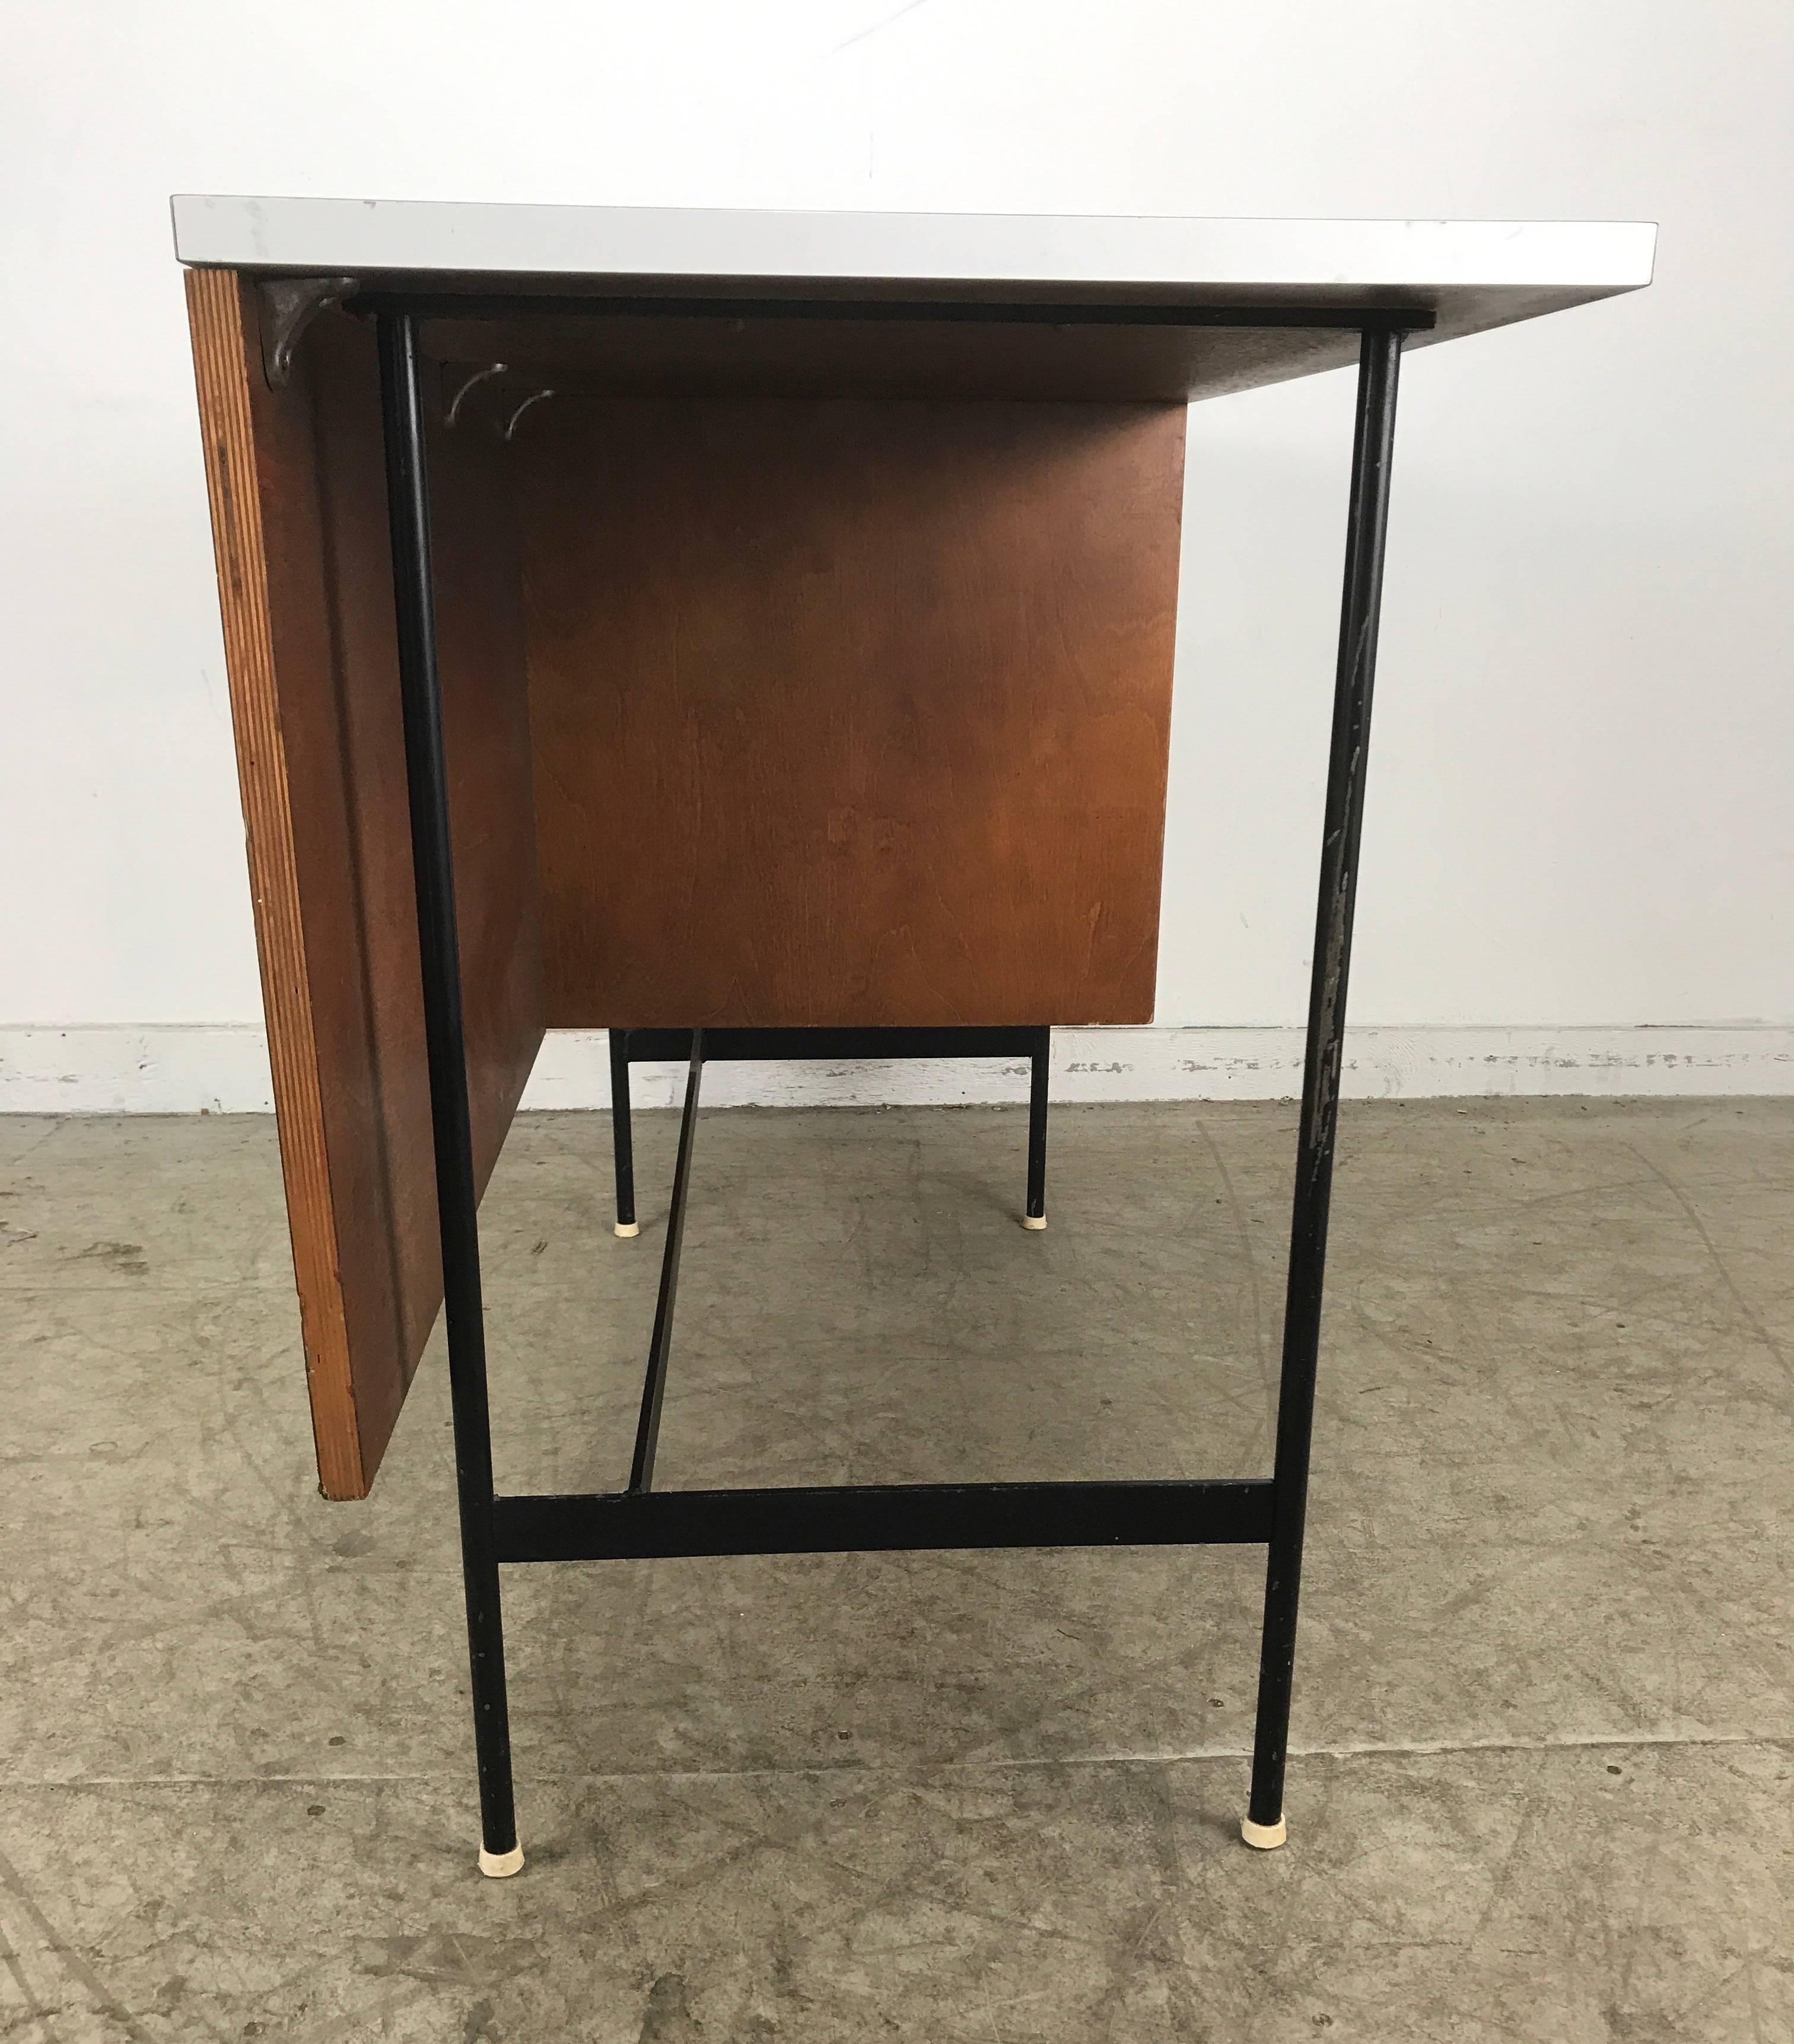 American Classic Mid-Century Modern Desk by Thonet Manner of Finn Juhl